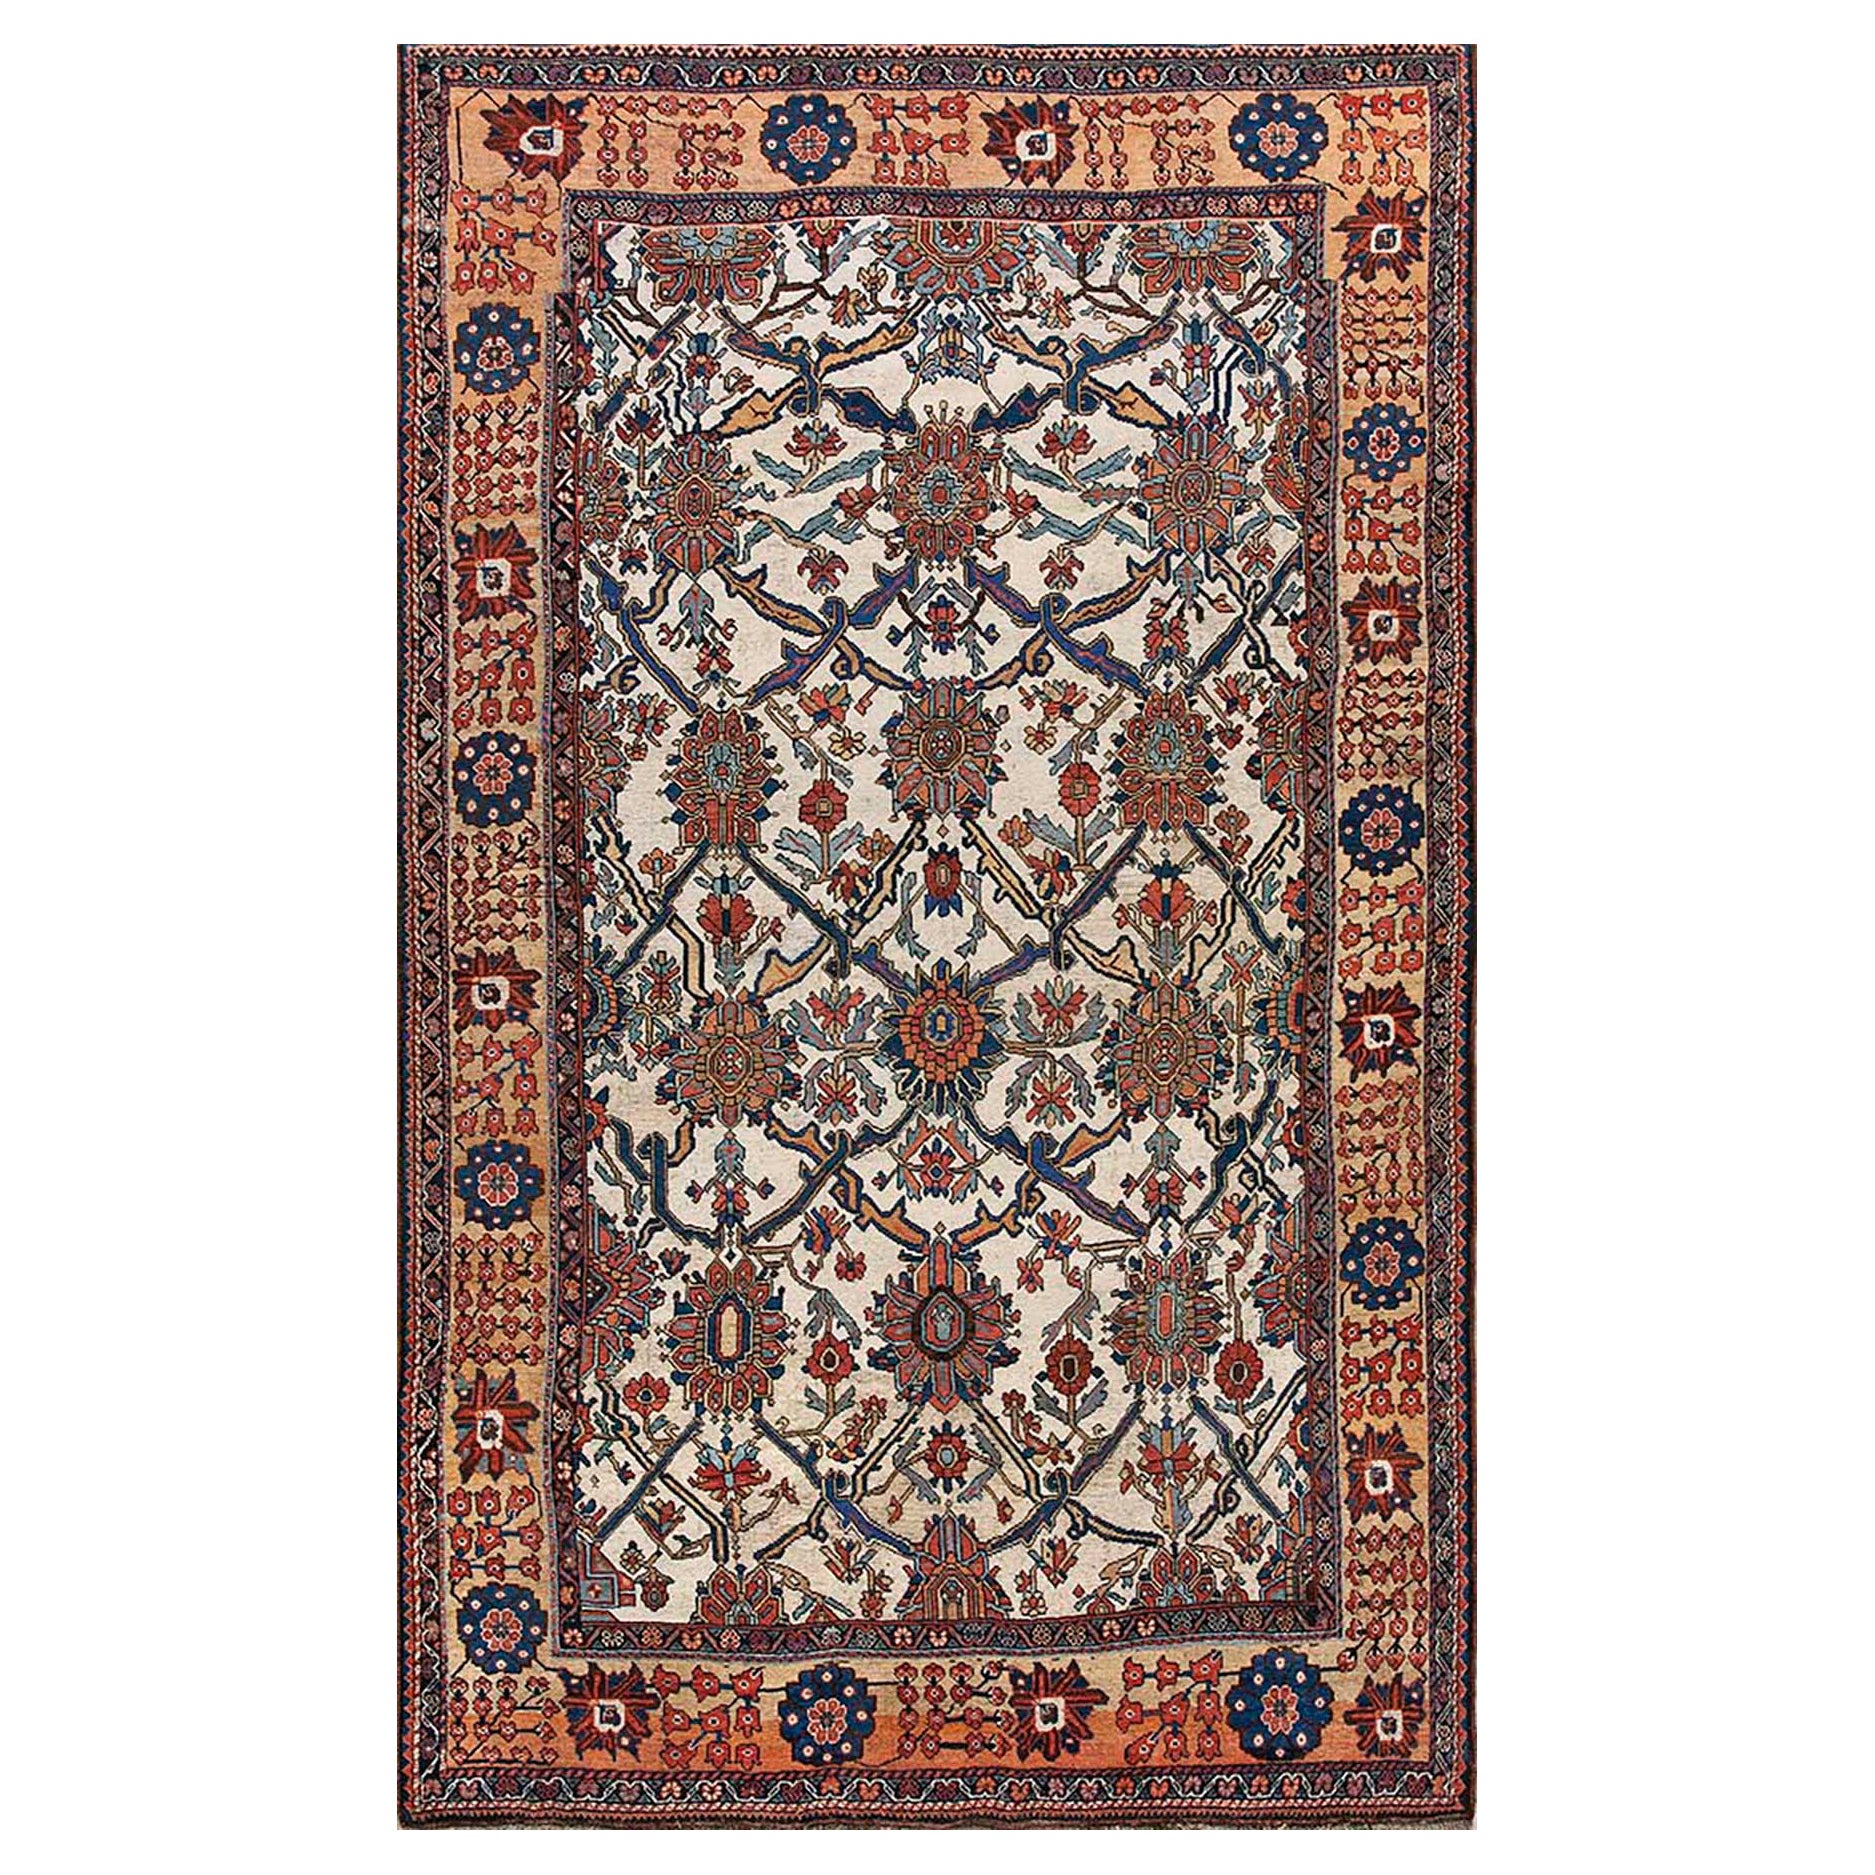 19th Century S. Persian, Fars region Bakhtiari carpet with design inspiration  For Sale